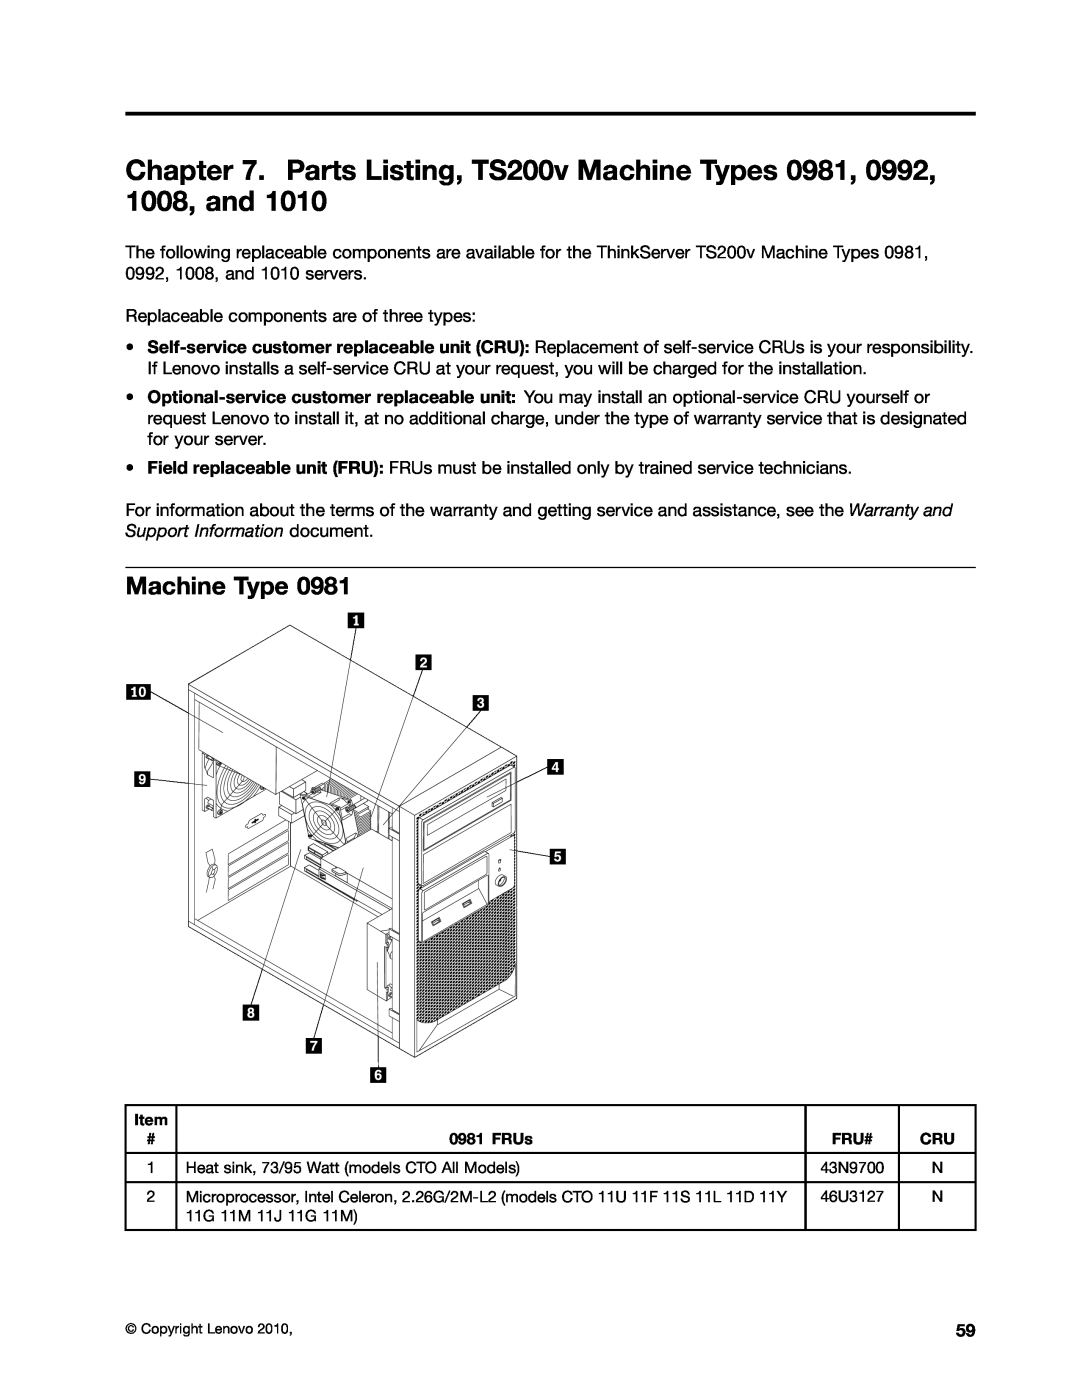 Lenovo 1010 manual Parts Listing, TS200v Machine Types 0981, 0992, 1008, and 